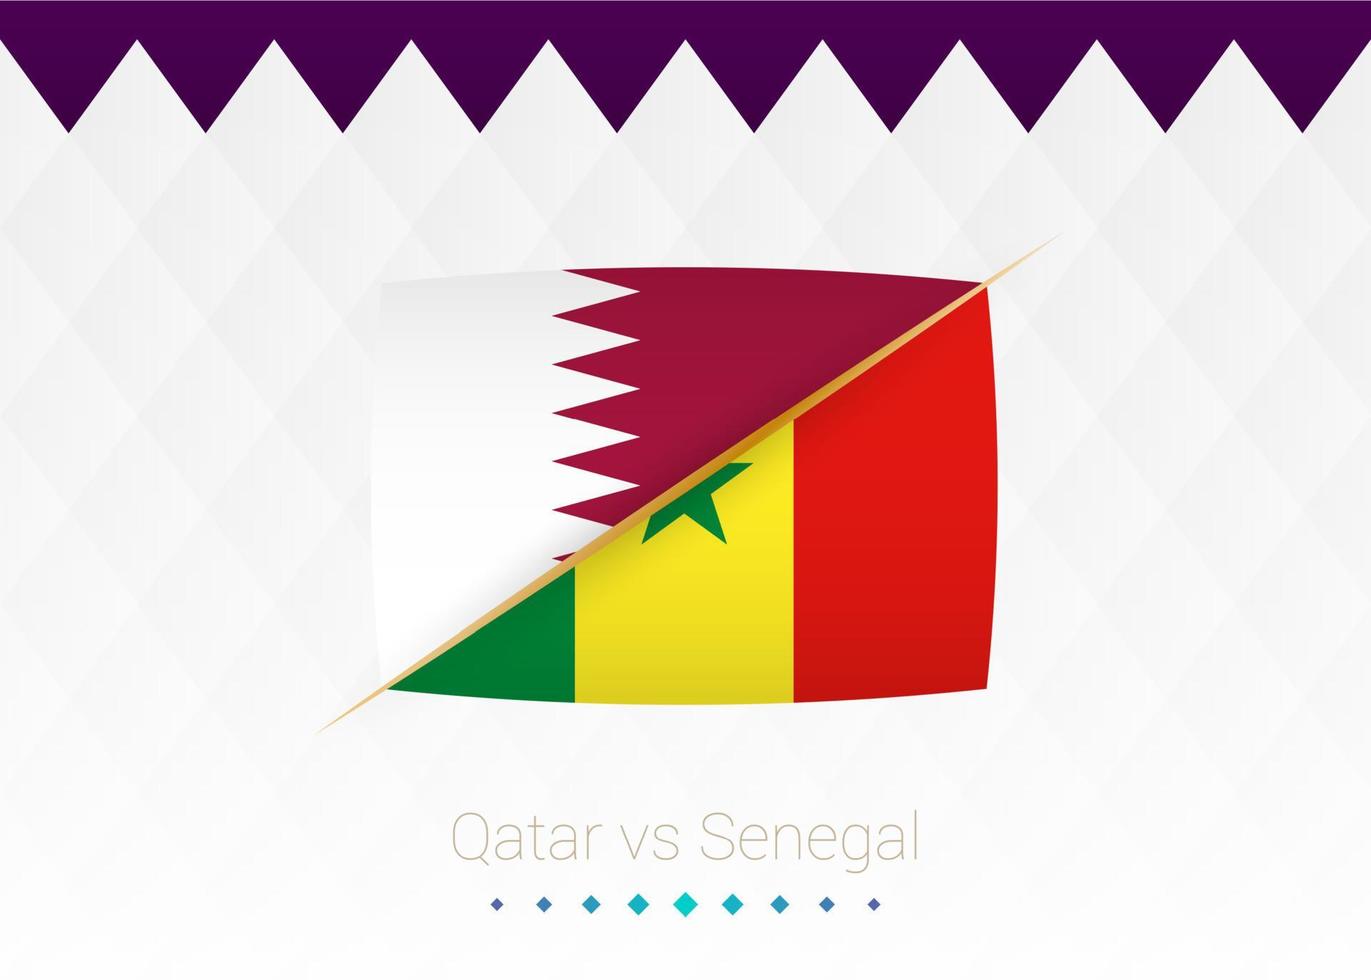 National football team Qatar vs Senegal. Soccer 2022 match versus icon. vector